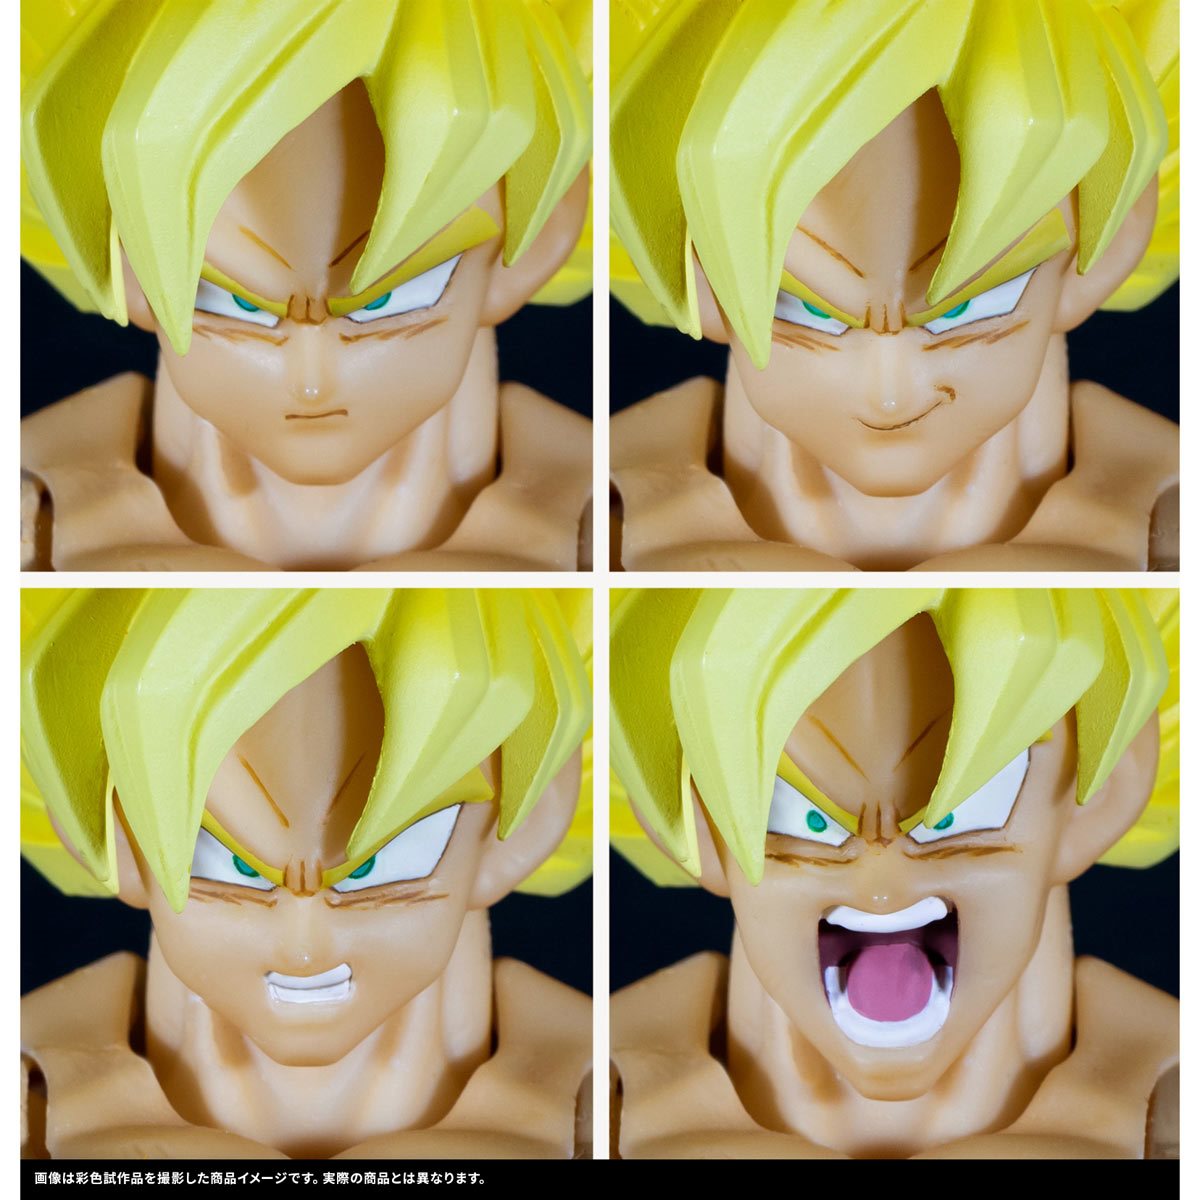  TAMASHII NATIONS - Super Saiyan Son Goku Legendary Super Saiyan Dragon  Ball Z, S.H. Figuarts Action Figure : Toys & Games